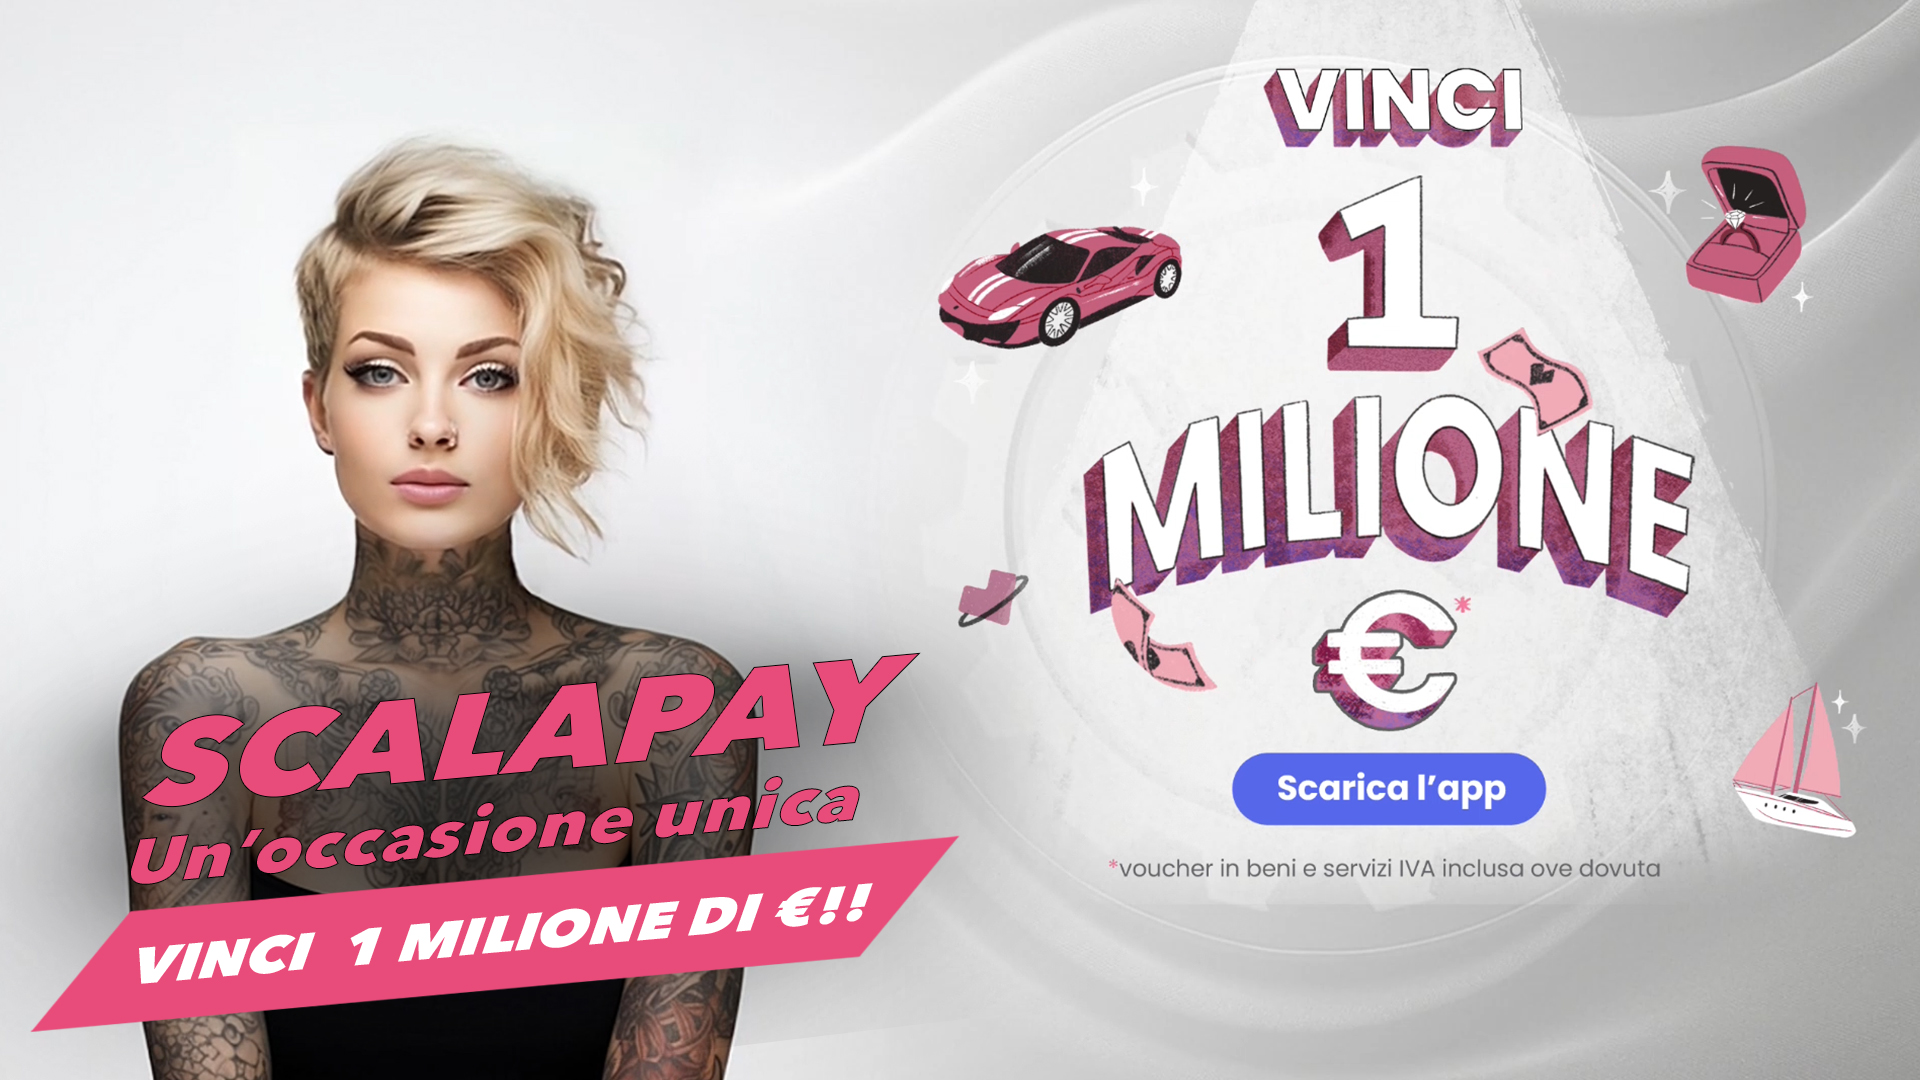 Vinci 1 Milione con Scalapay!